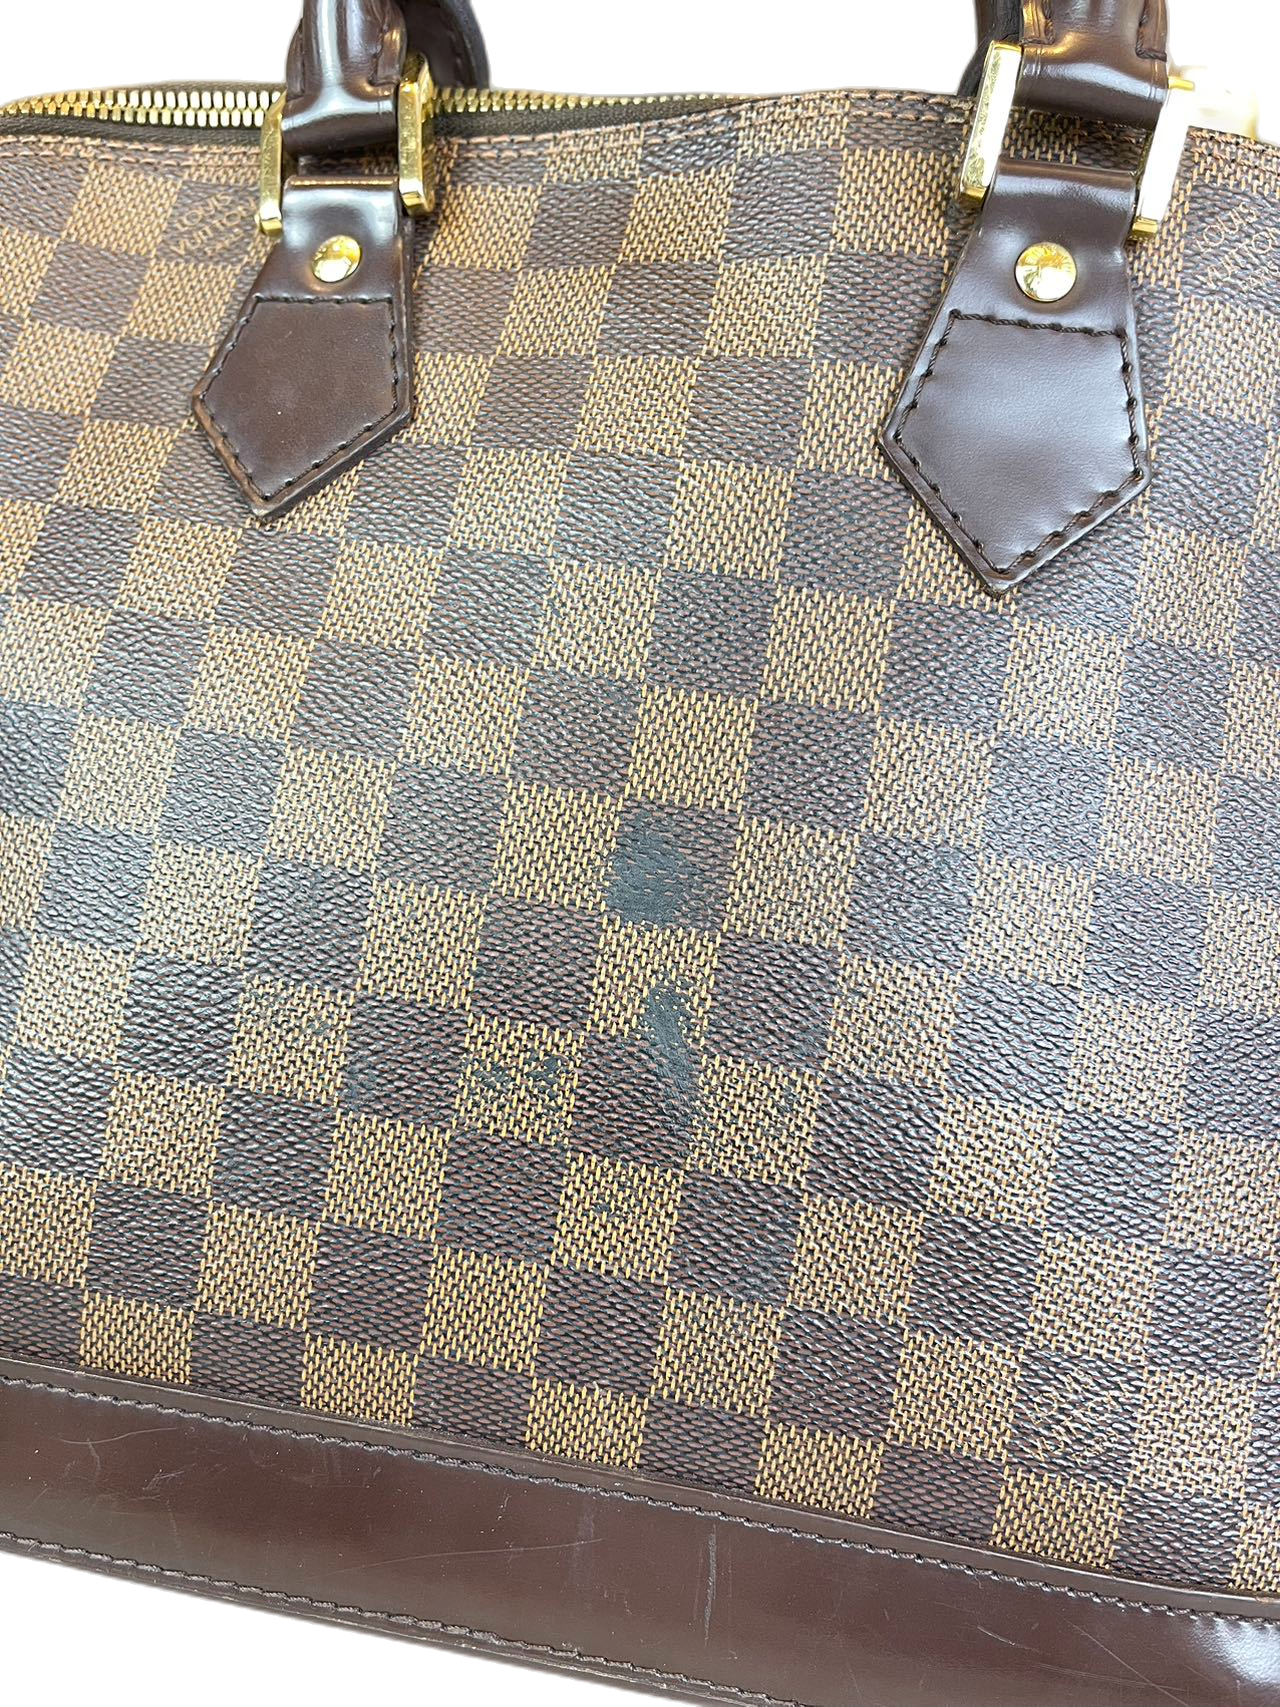 Preloved Louis Vuitton Damier Ebene Alma PM Satchel Handbag